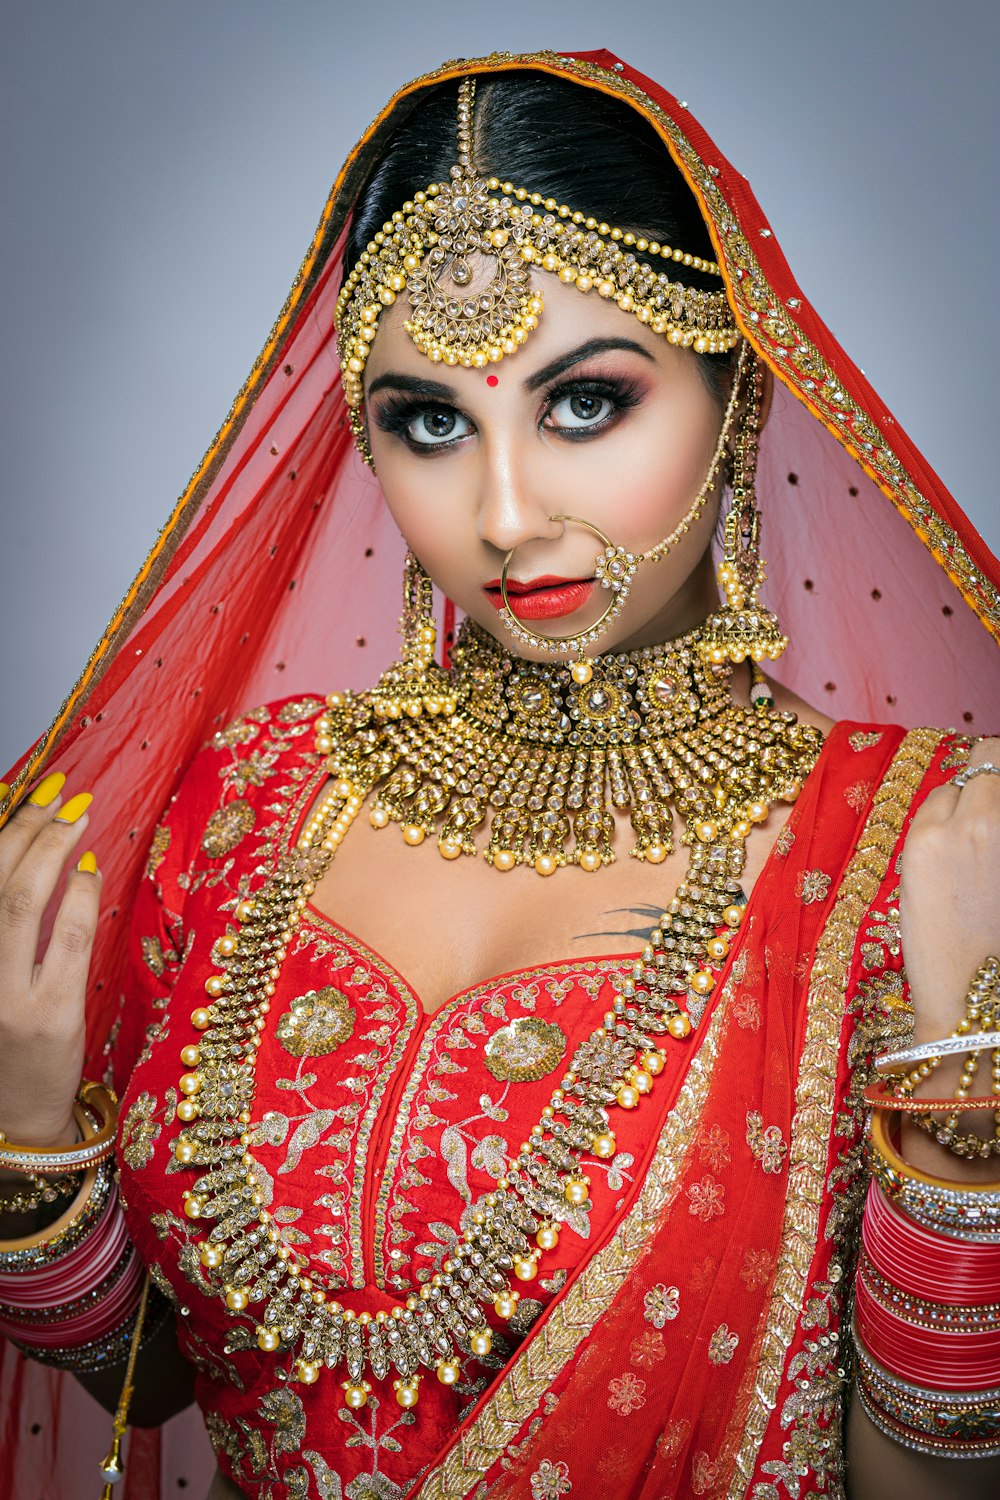 Femme en robe sari rouge et or